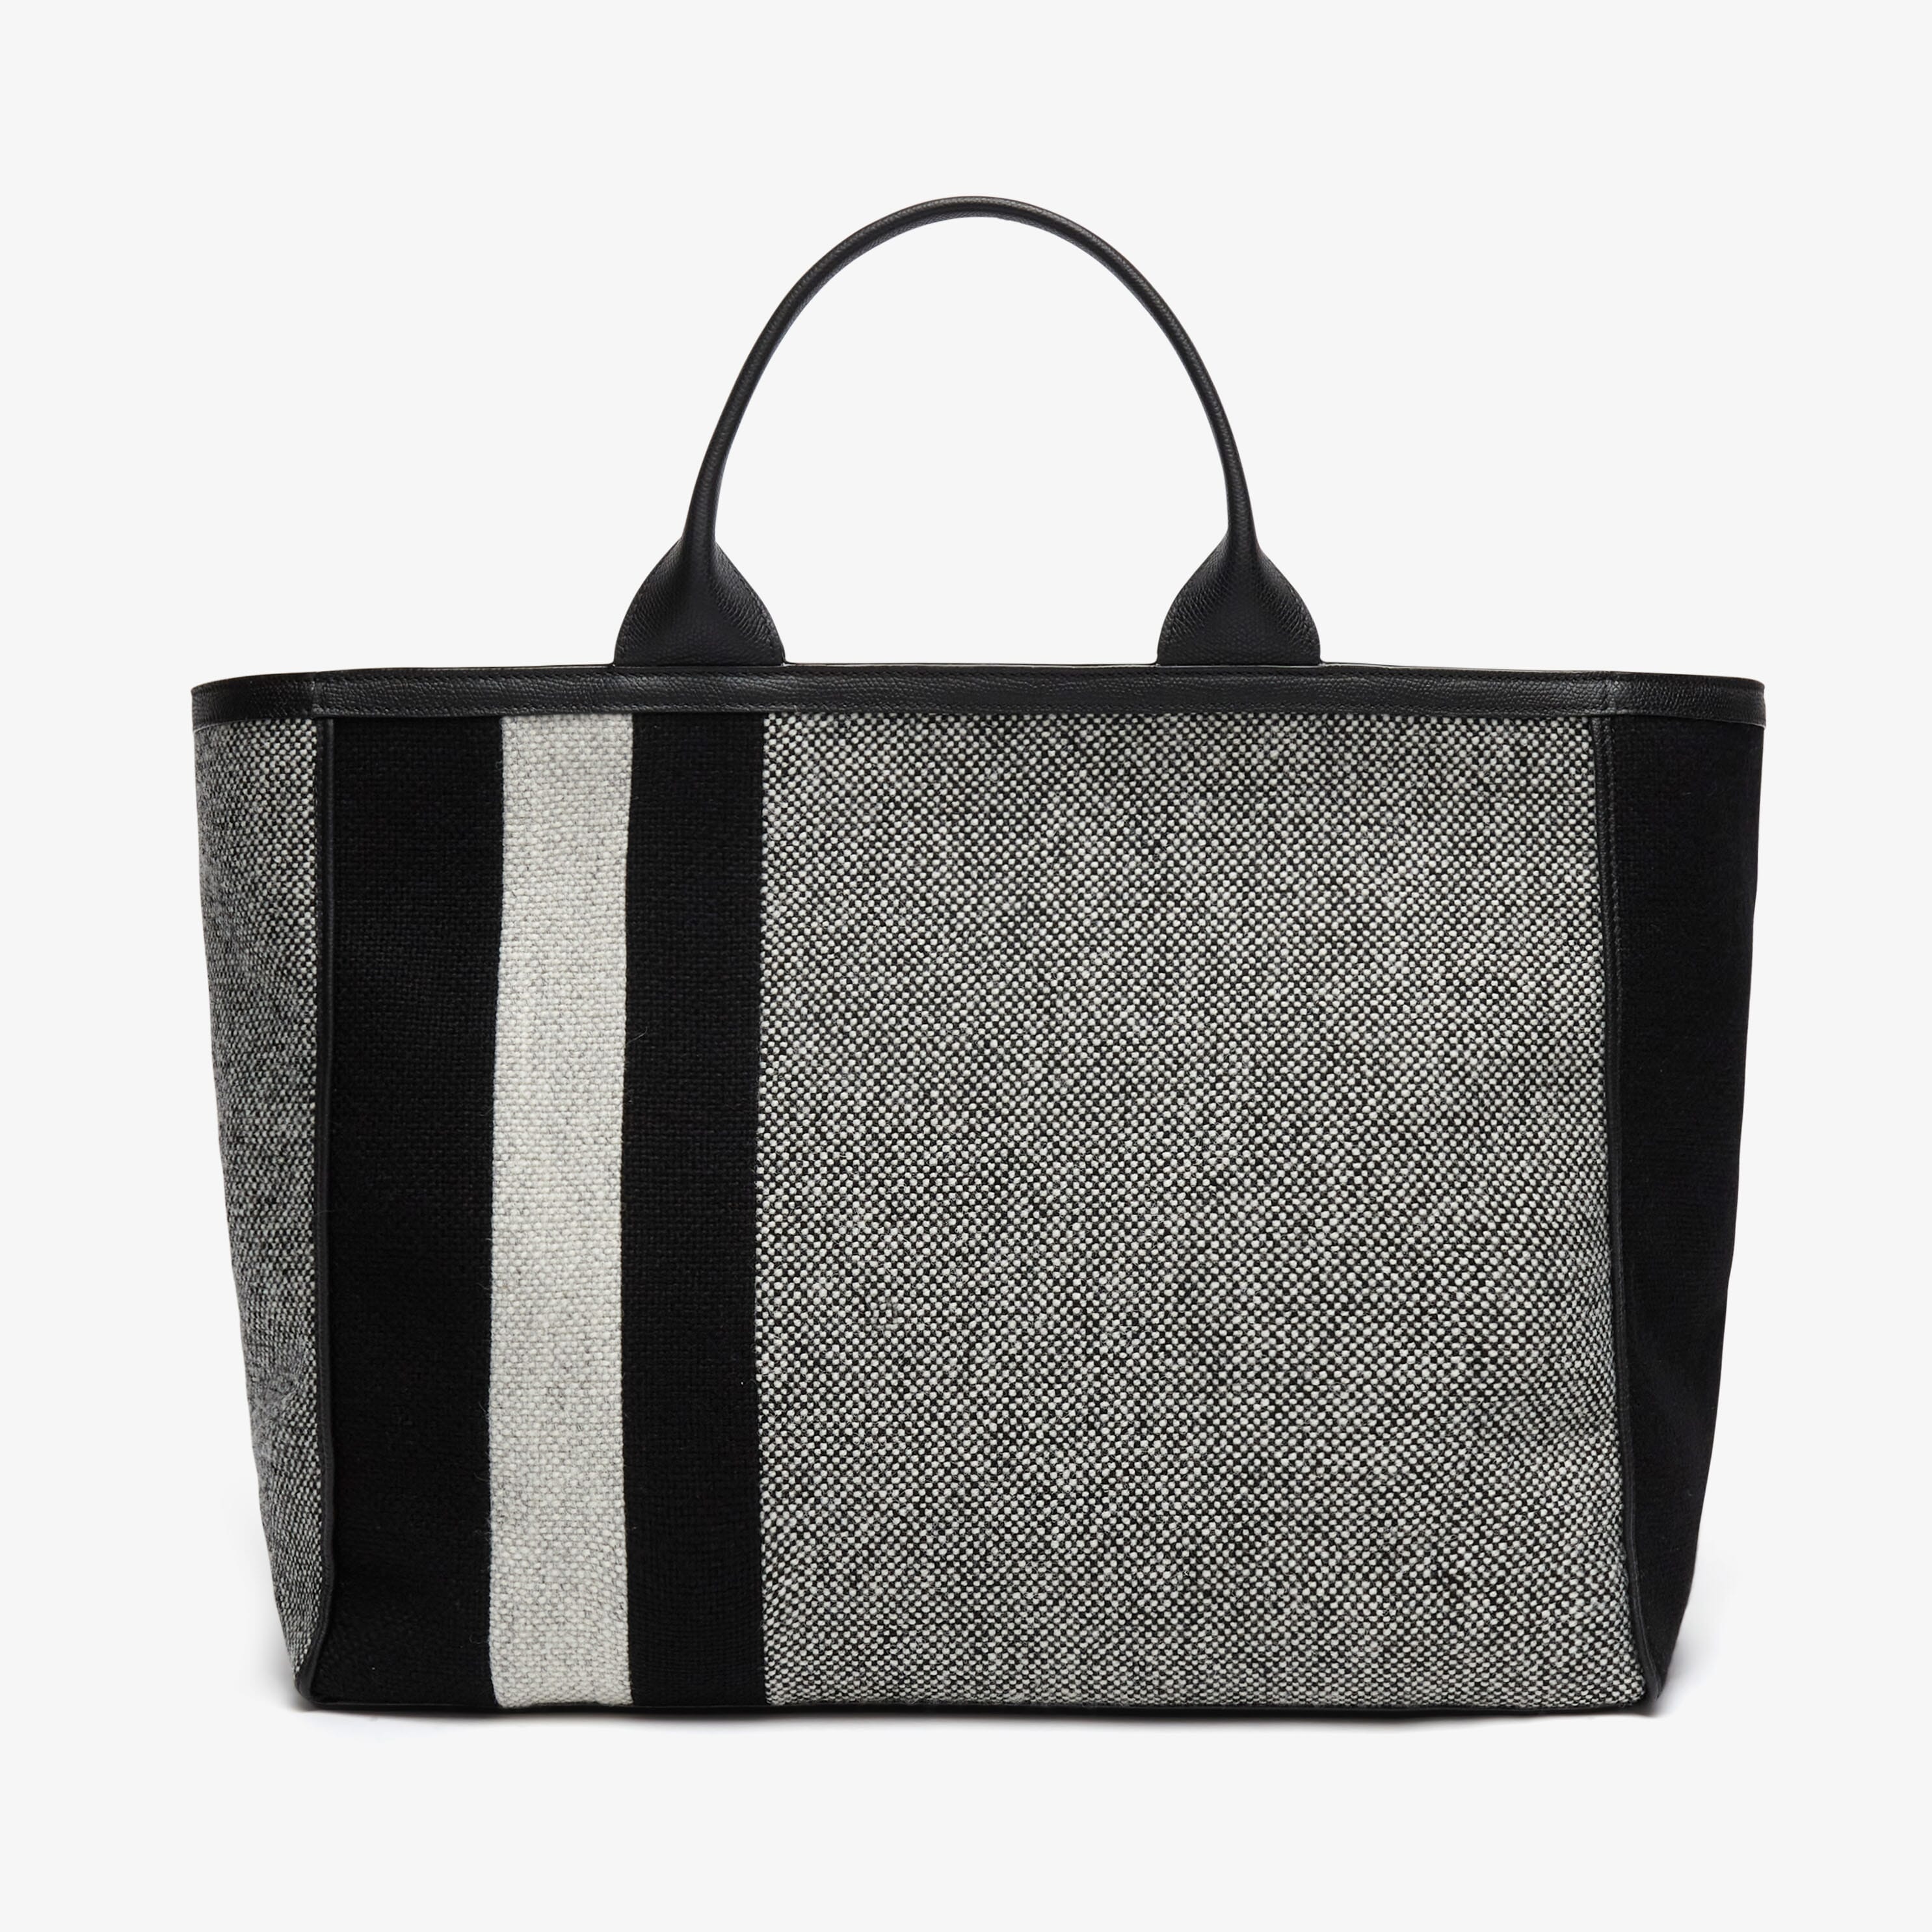 Linear Lana Tote Large Bag - Black/White/Grey - Tessuto Hallingdal/Vitello VS - Valextra - 3